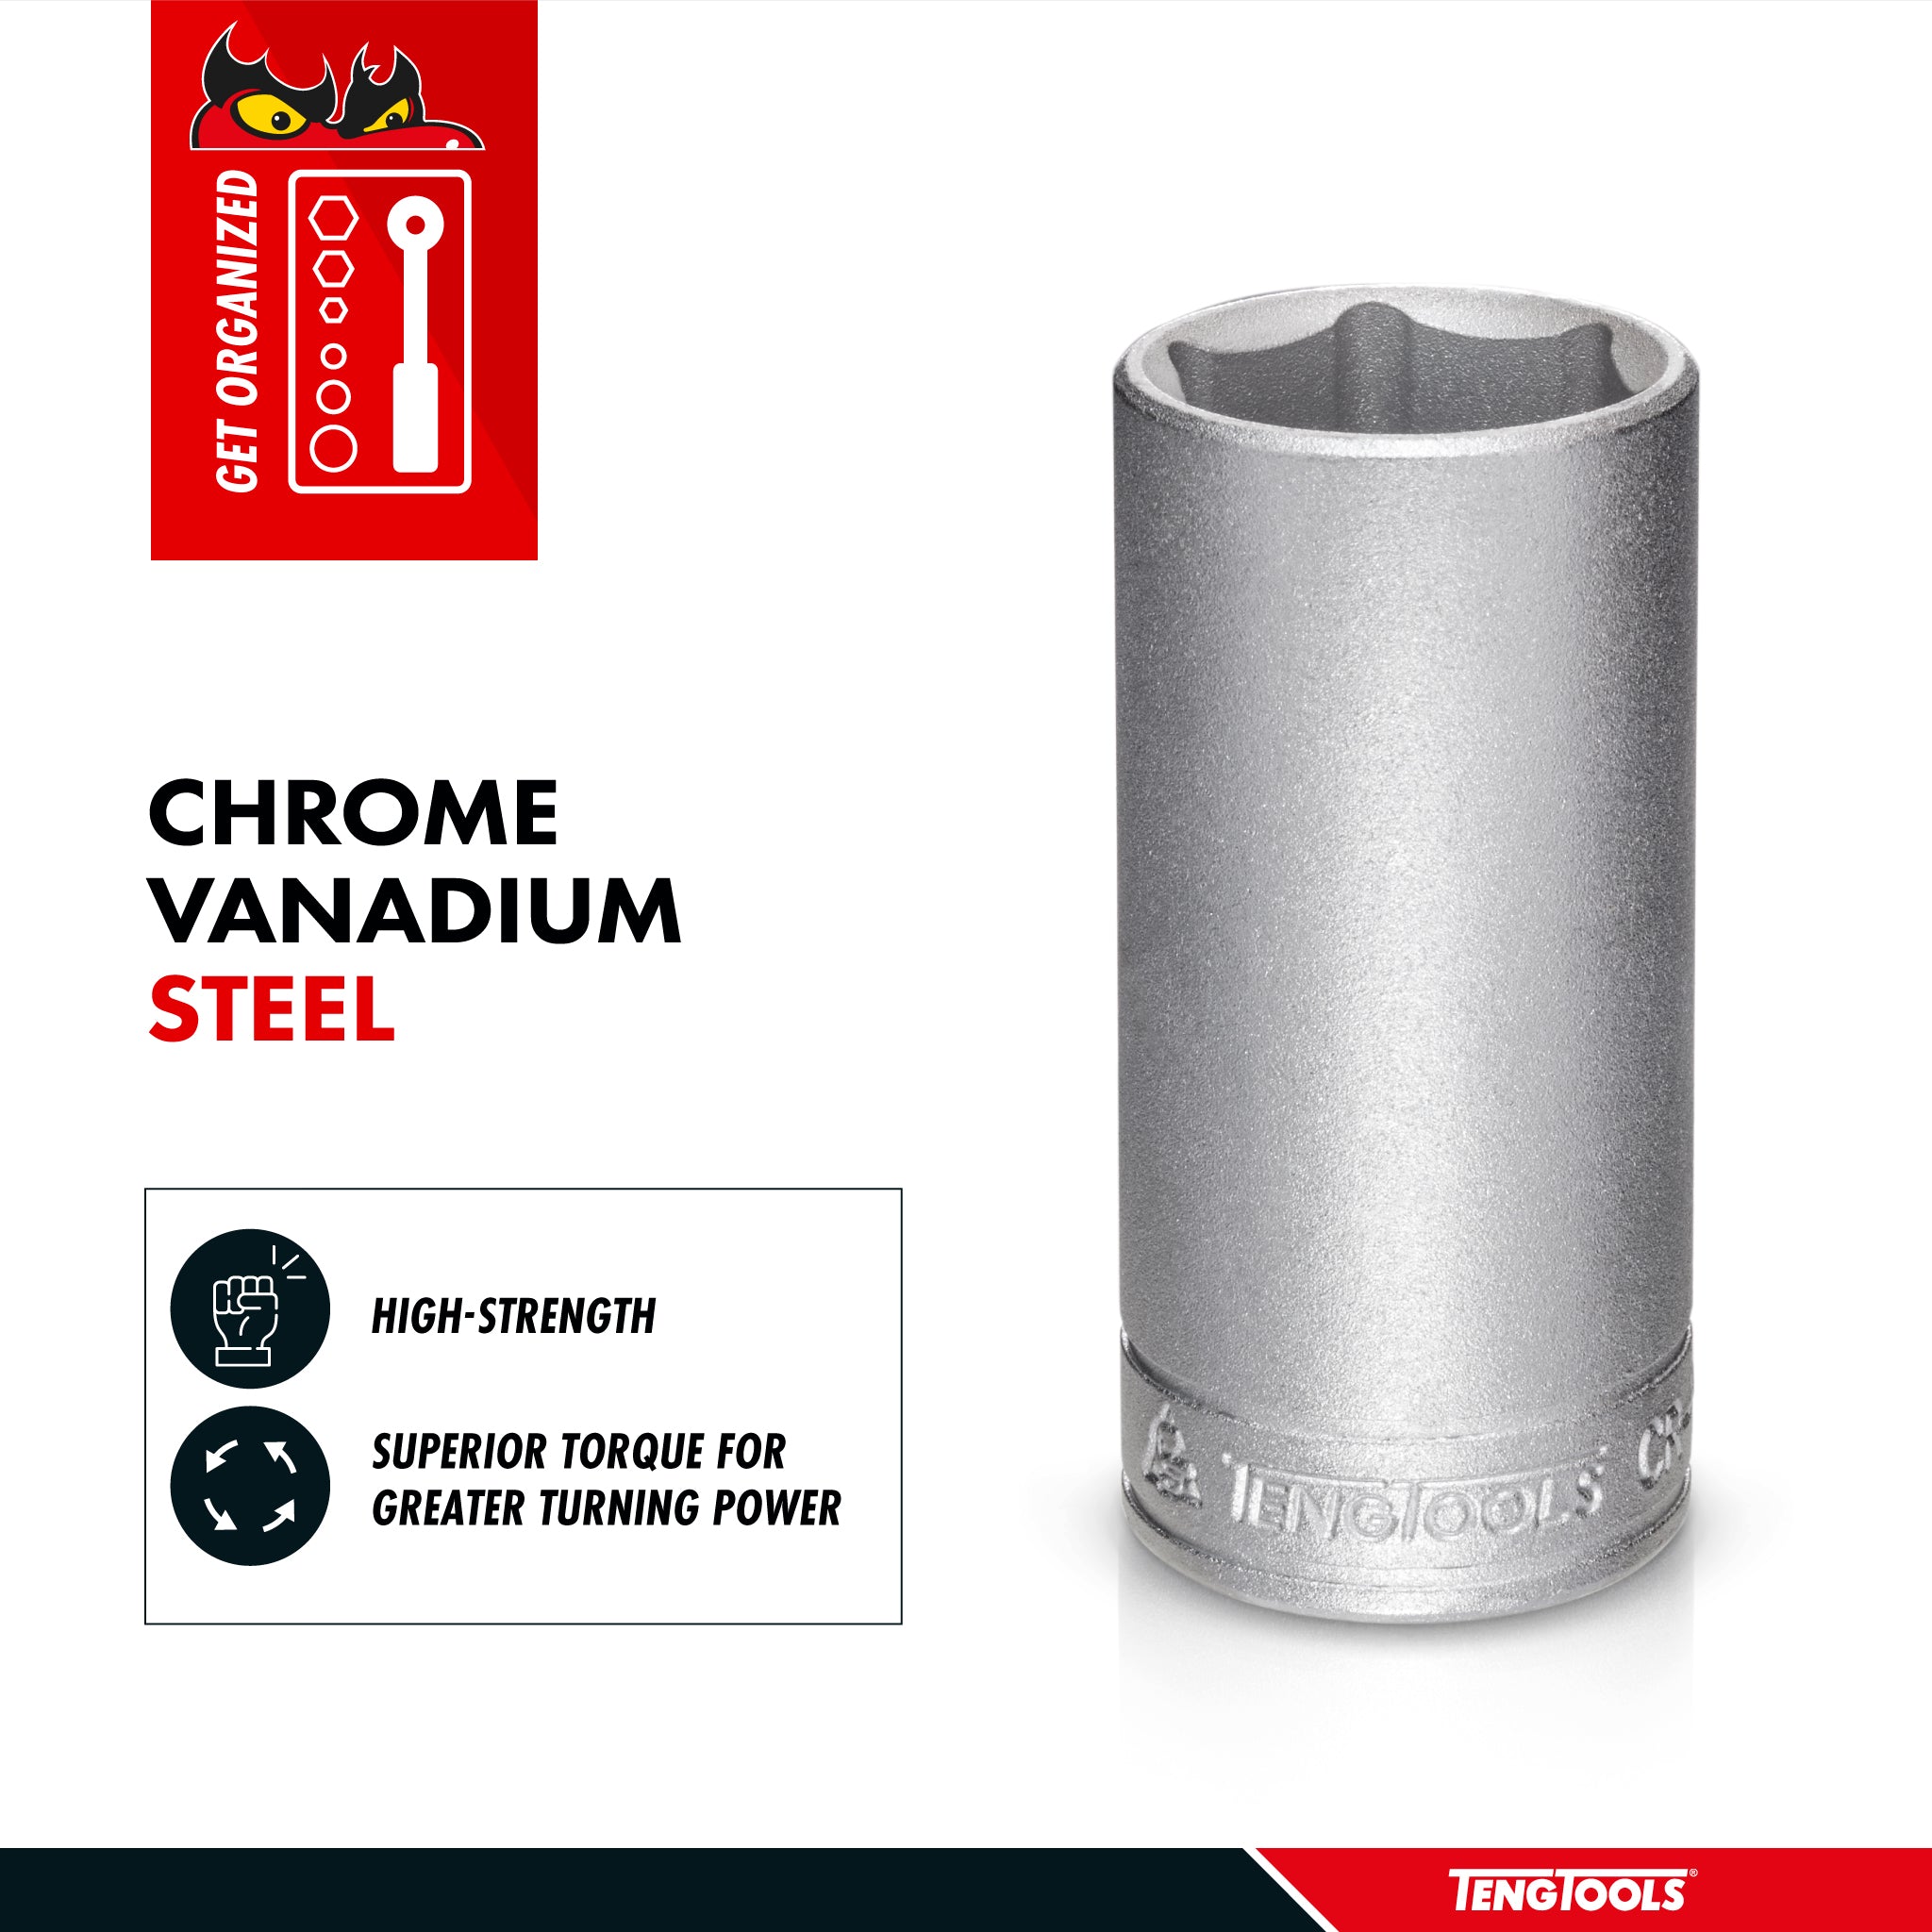 Teng Tools 6 Point SAE Deep 1/4 Inch Drive Chrome Vanadium Sockets - 11/32